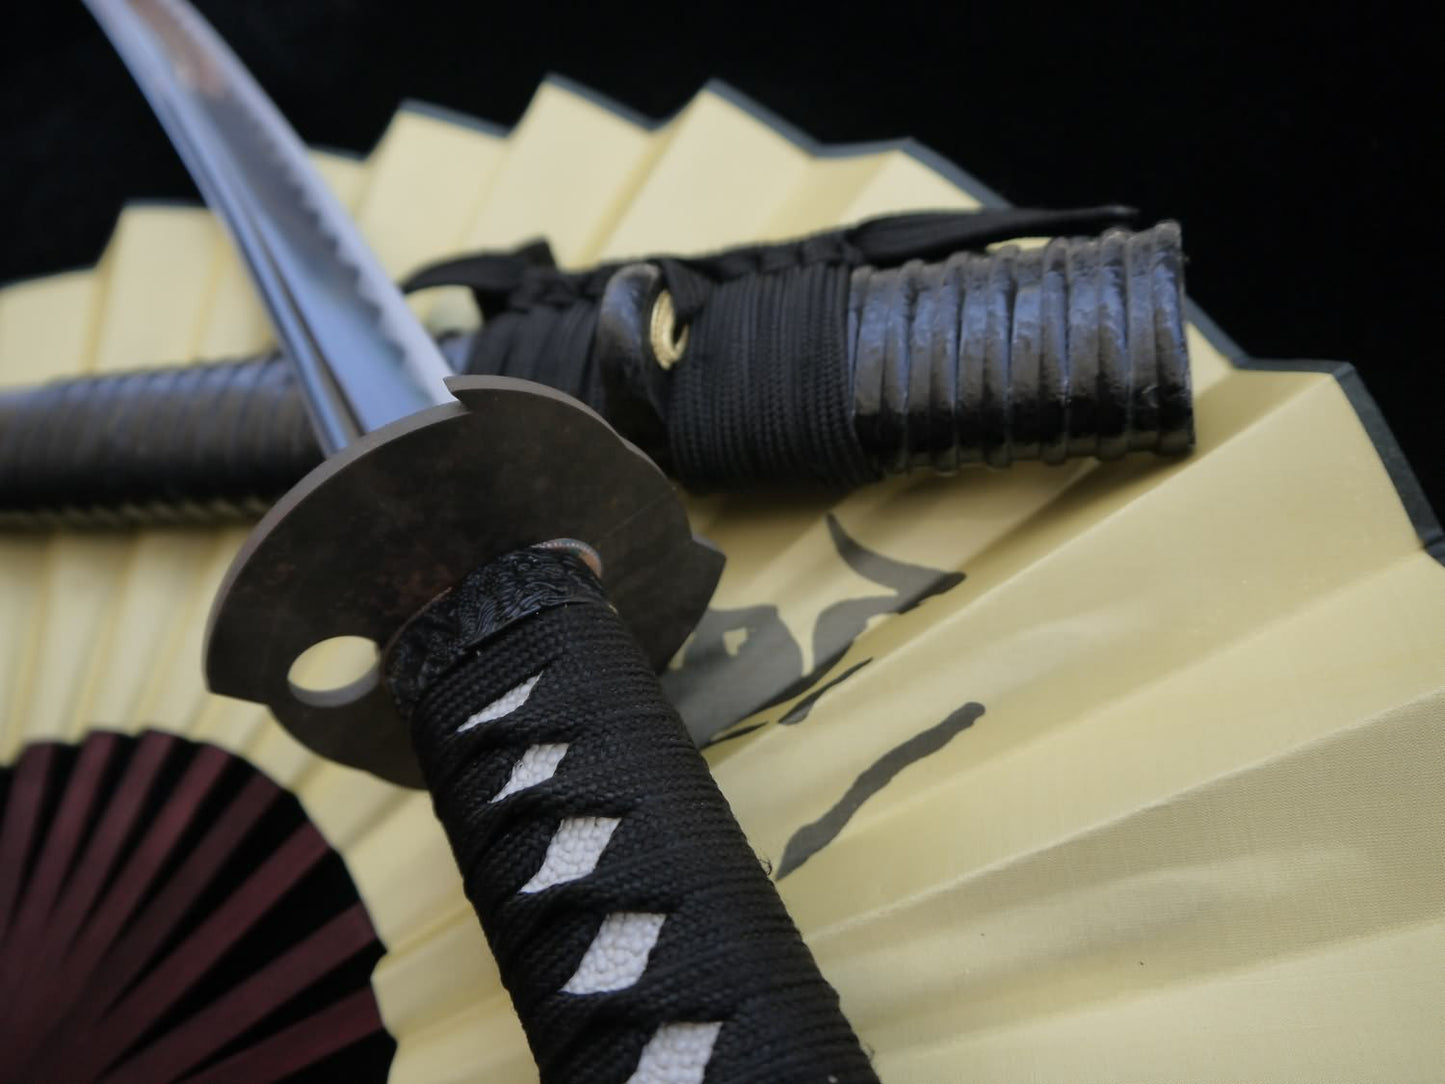 Japanese Samurai Katana Sword,Medium carbon steel black blade,Wood scabbard,Iron Tsuba,Full tang,Length 39 inch - Chinese sword shop